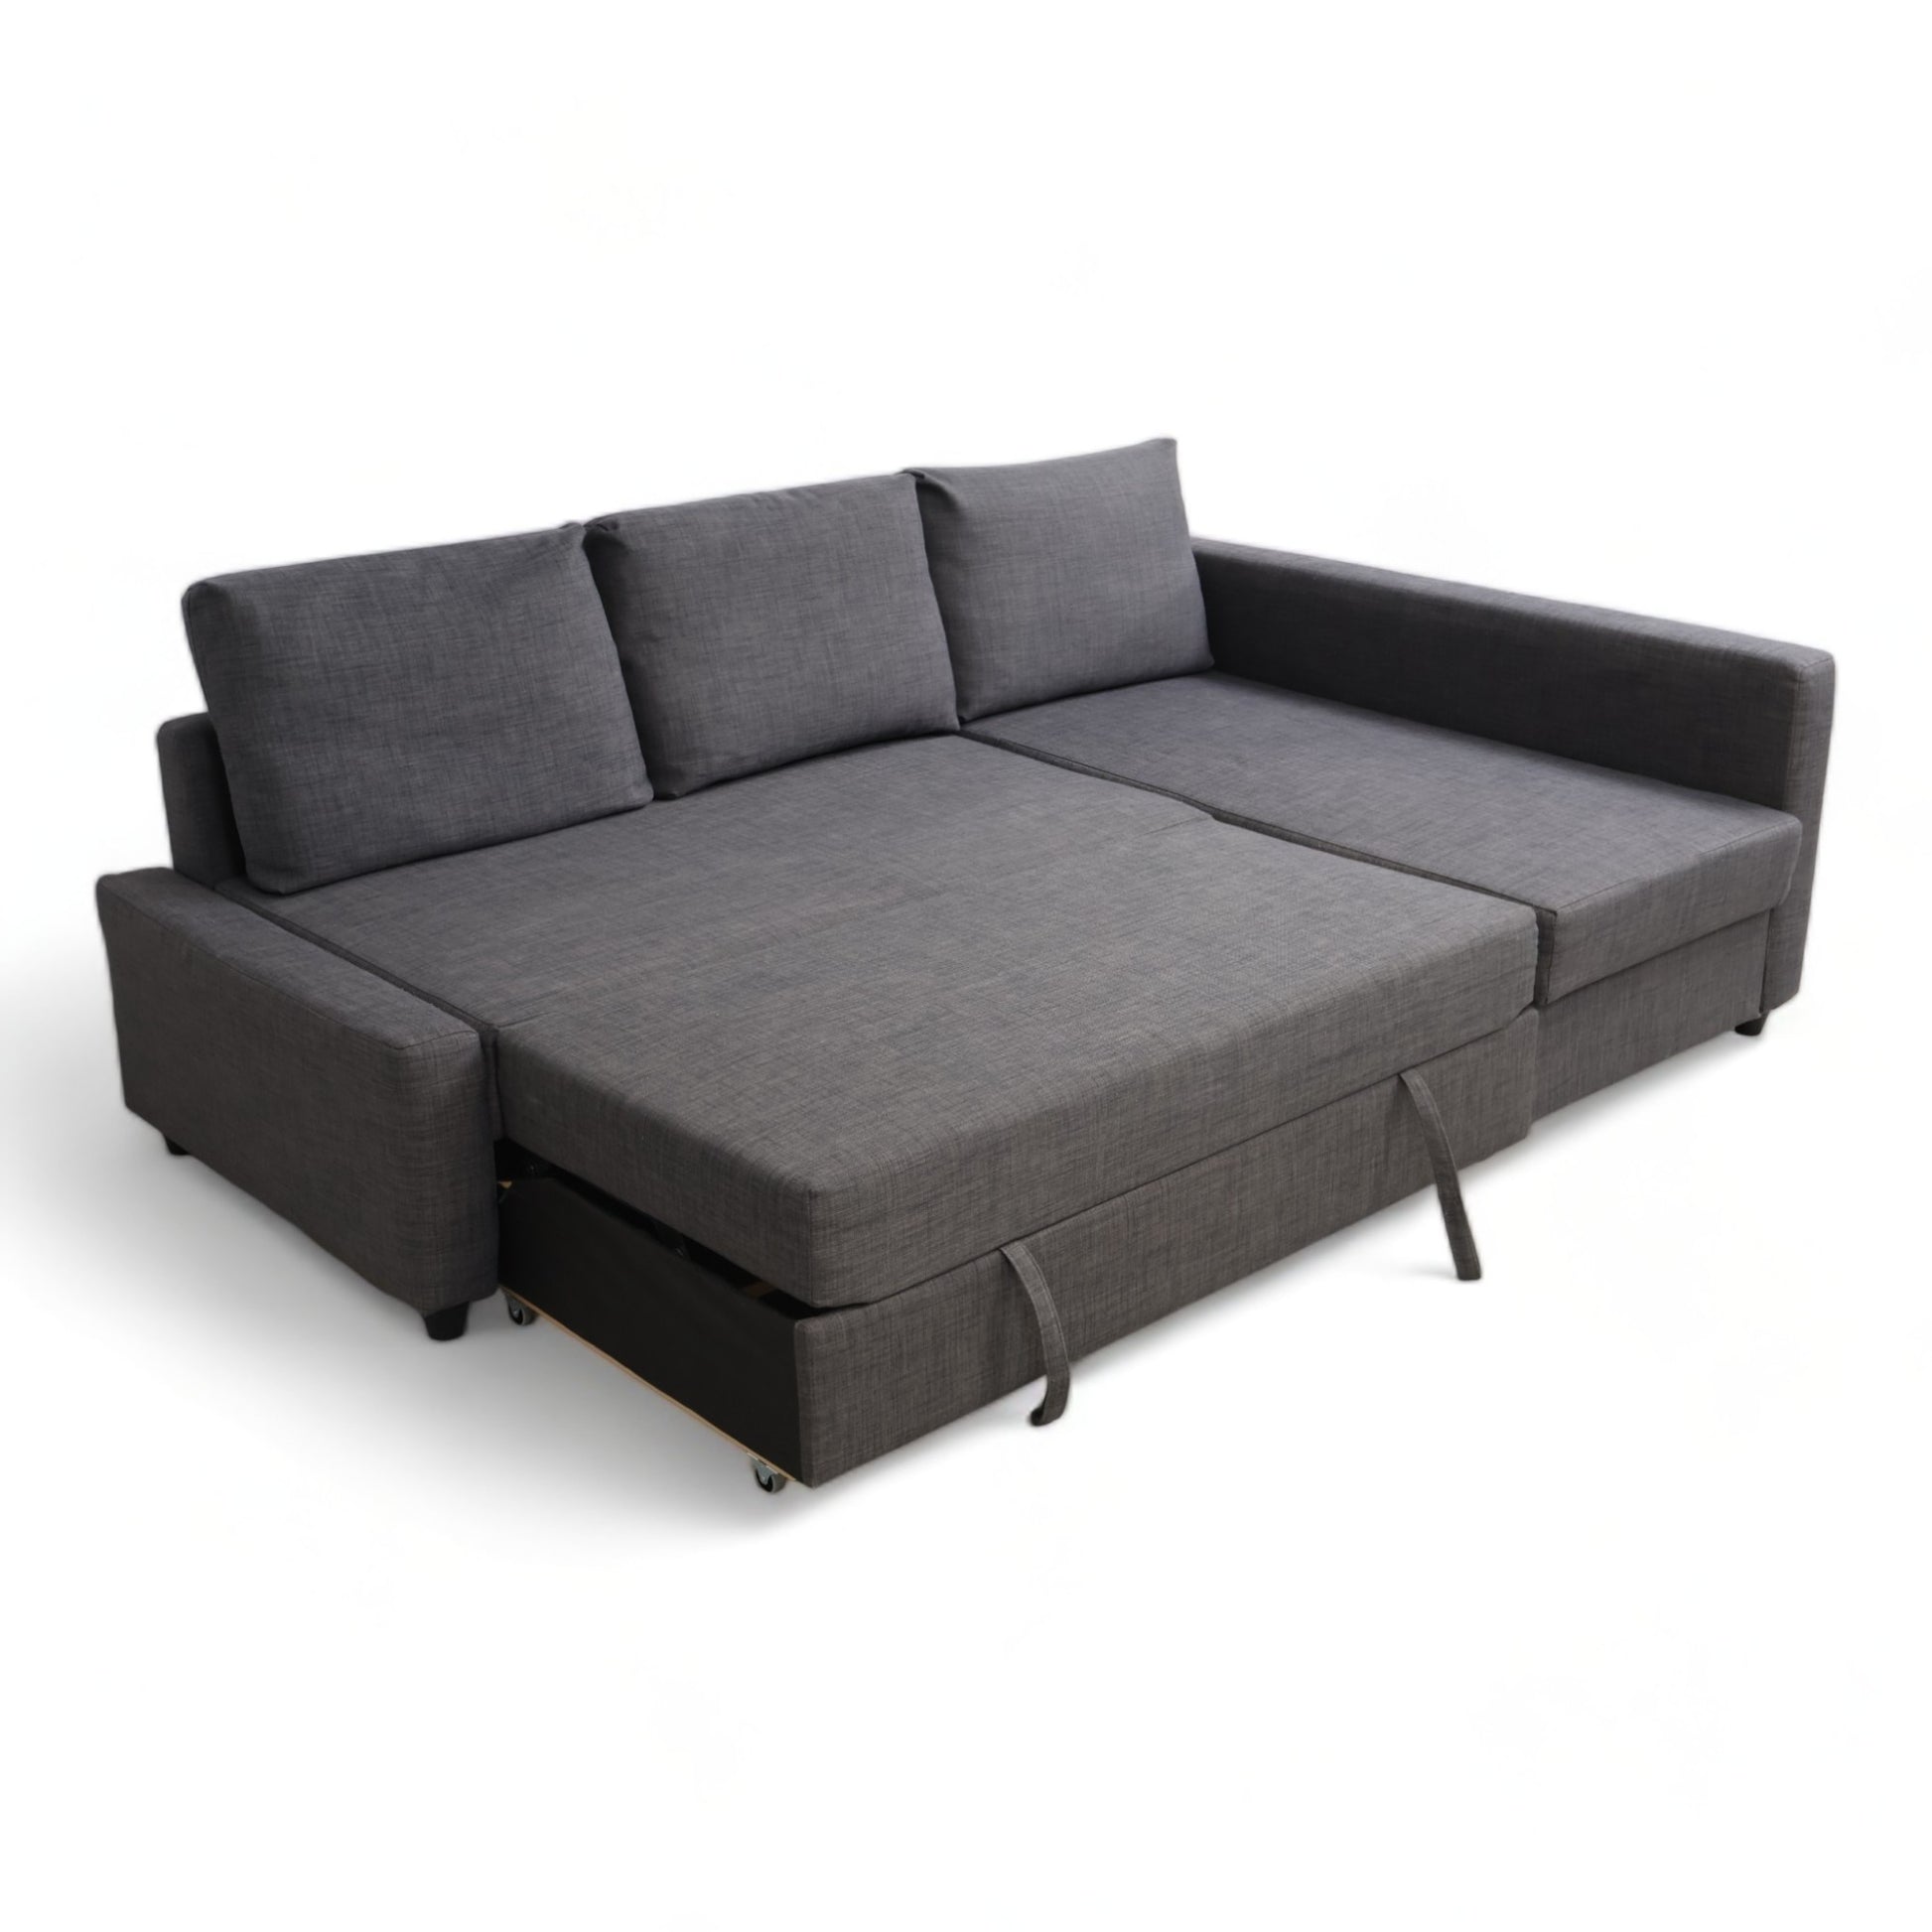 Nyrenset | Mørk grå IKEA Friheten sovesofa